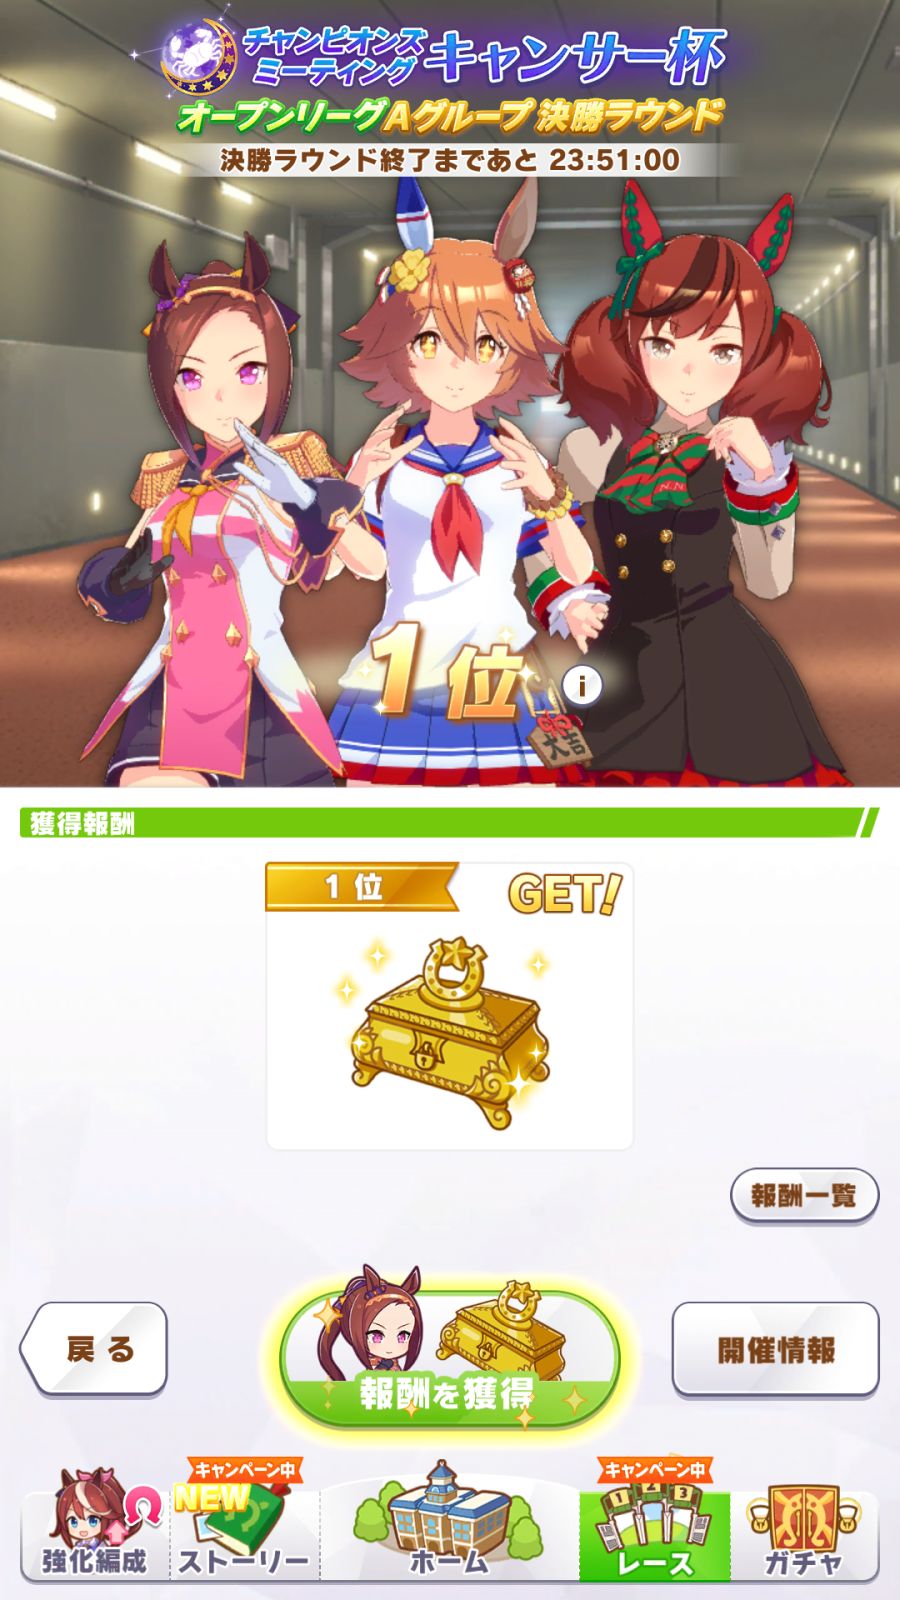 jp.co.cygames.umamusume_Screenshot_2021.07.28_12.08.56.png